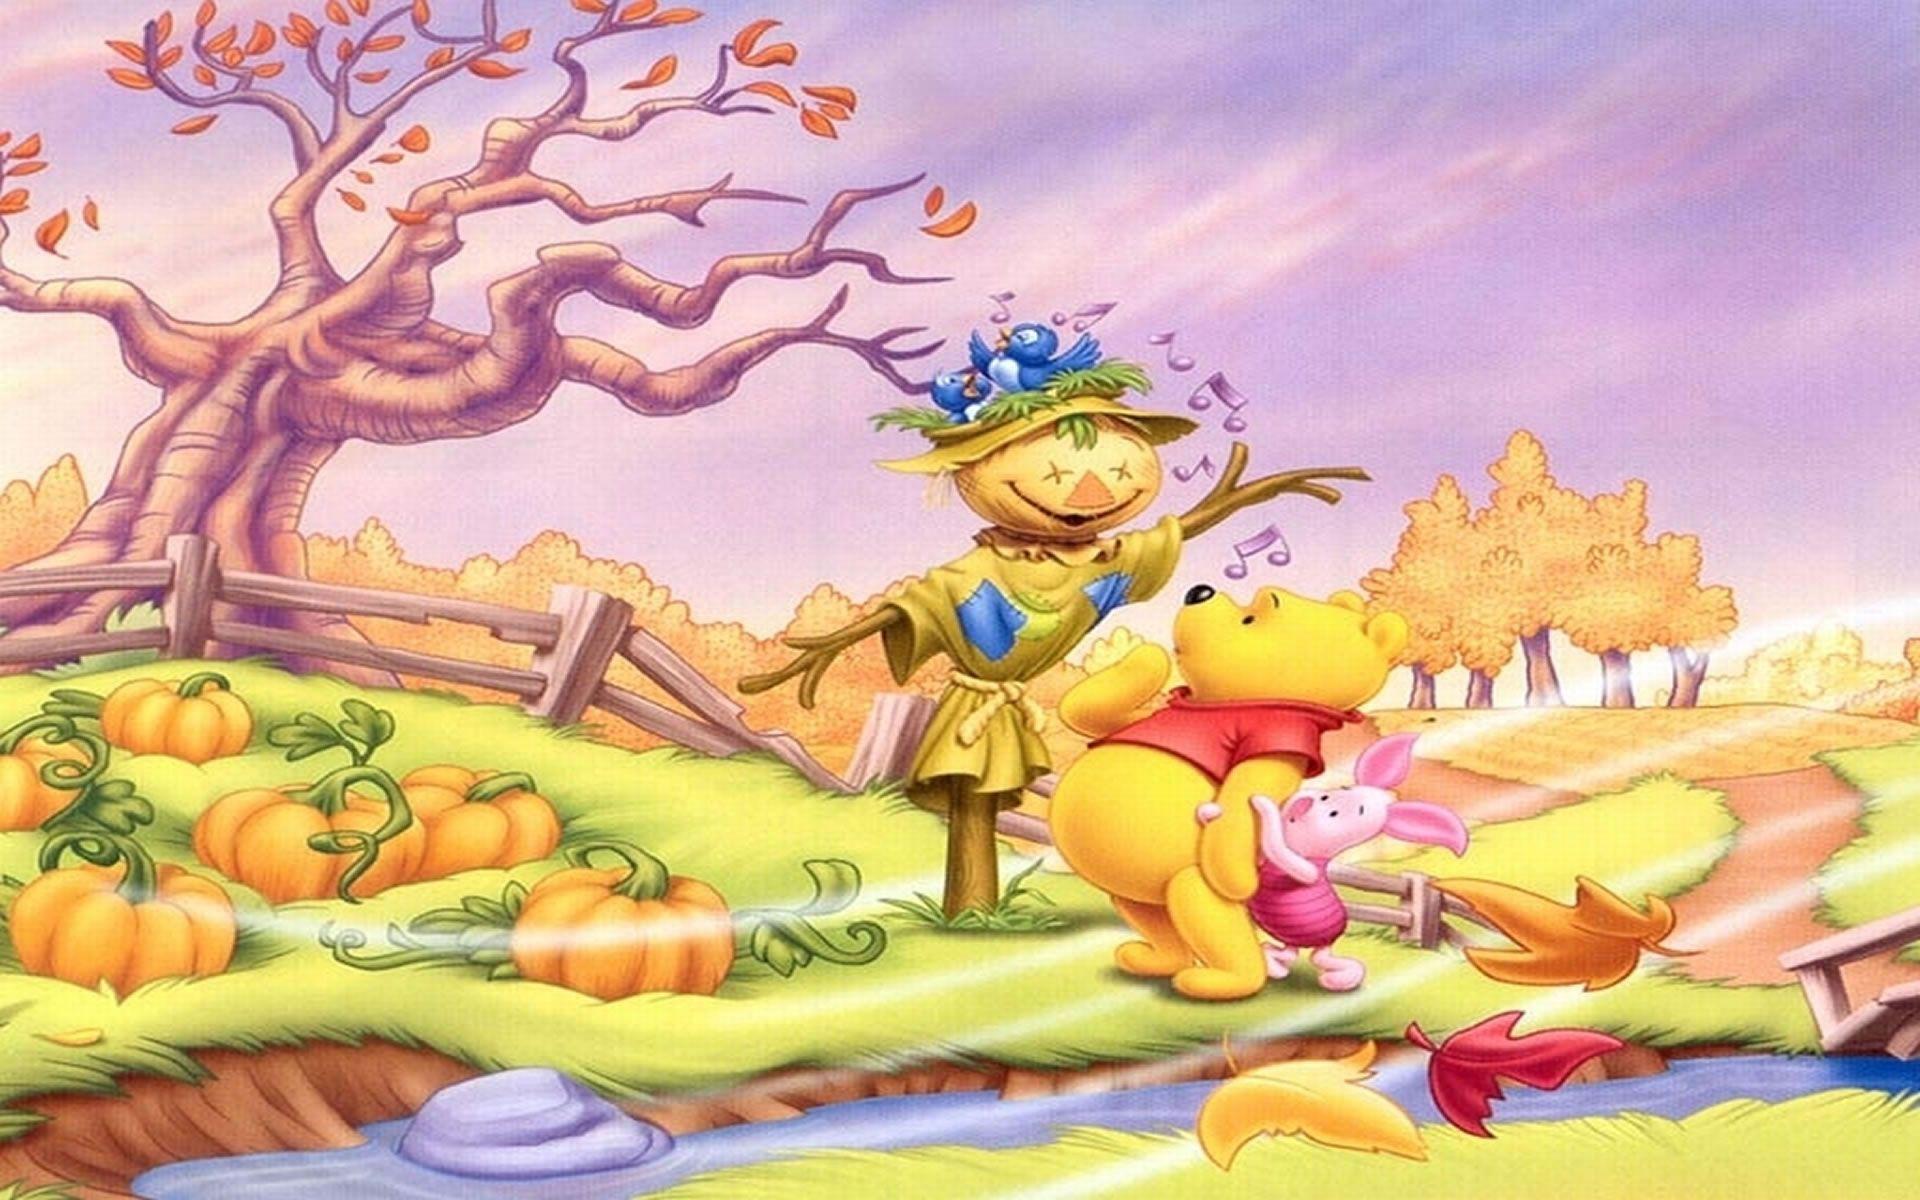 Winnie The Pooh Wallpaper. Winnie The Pooh Background